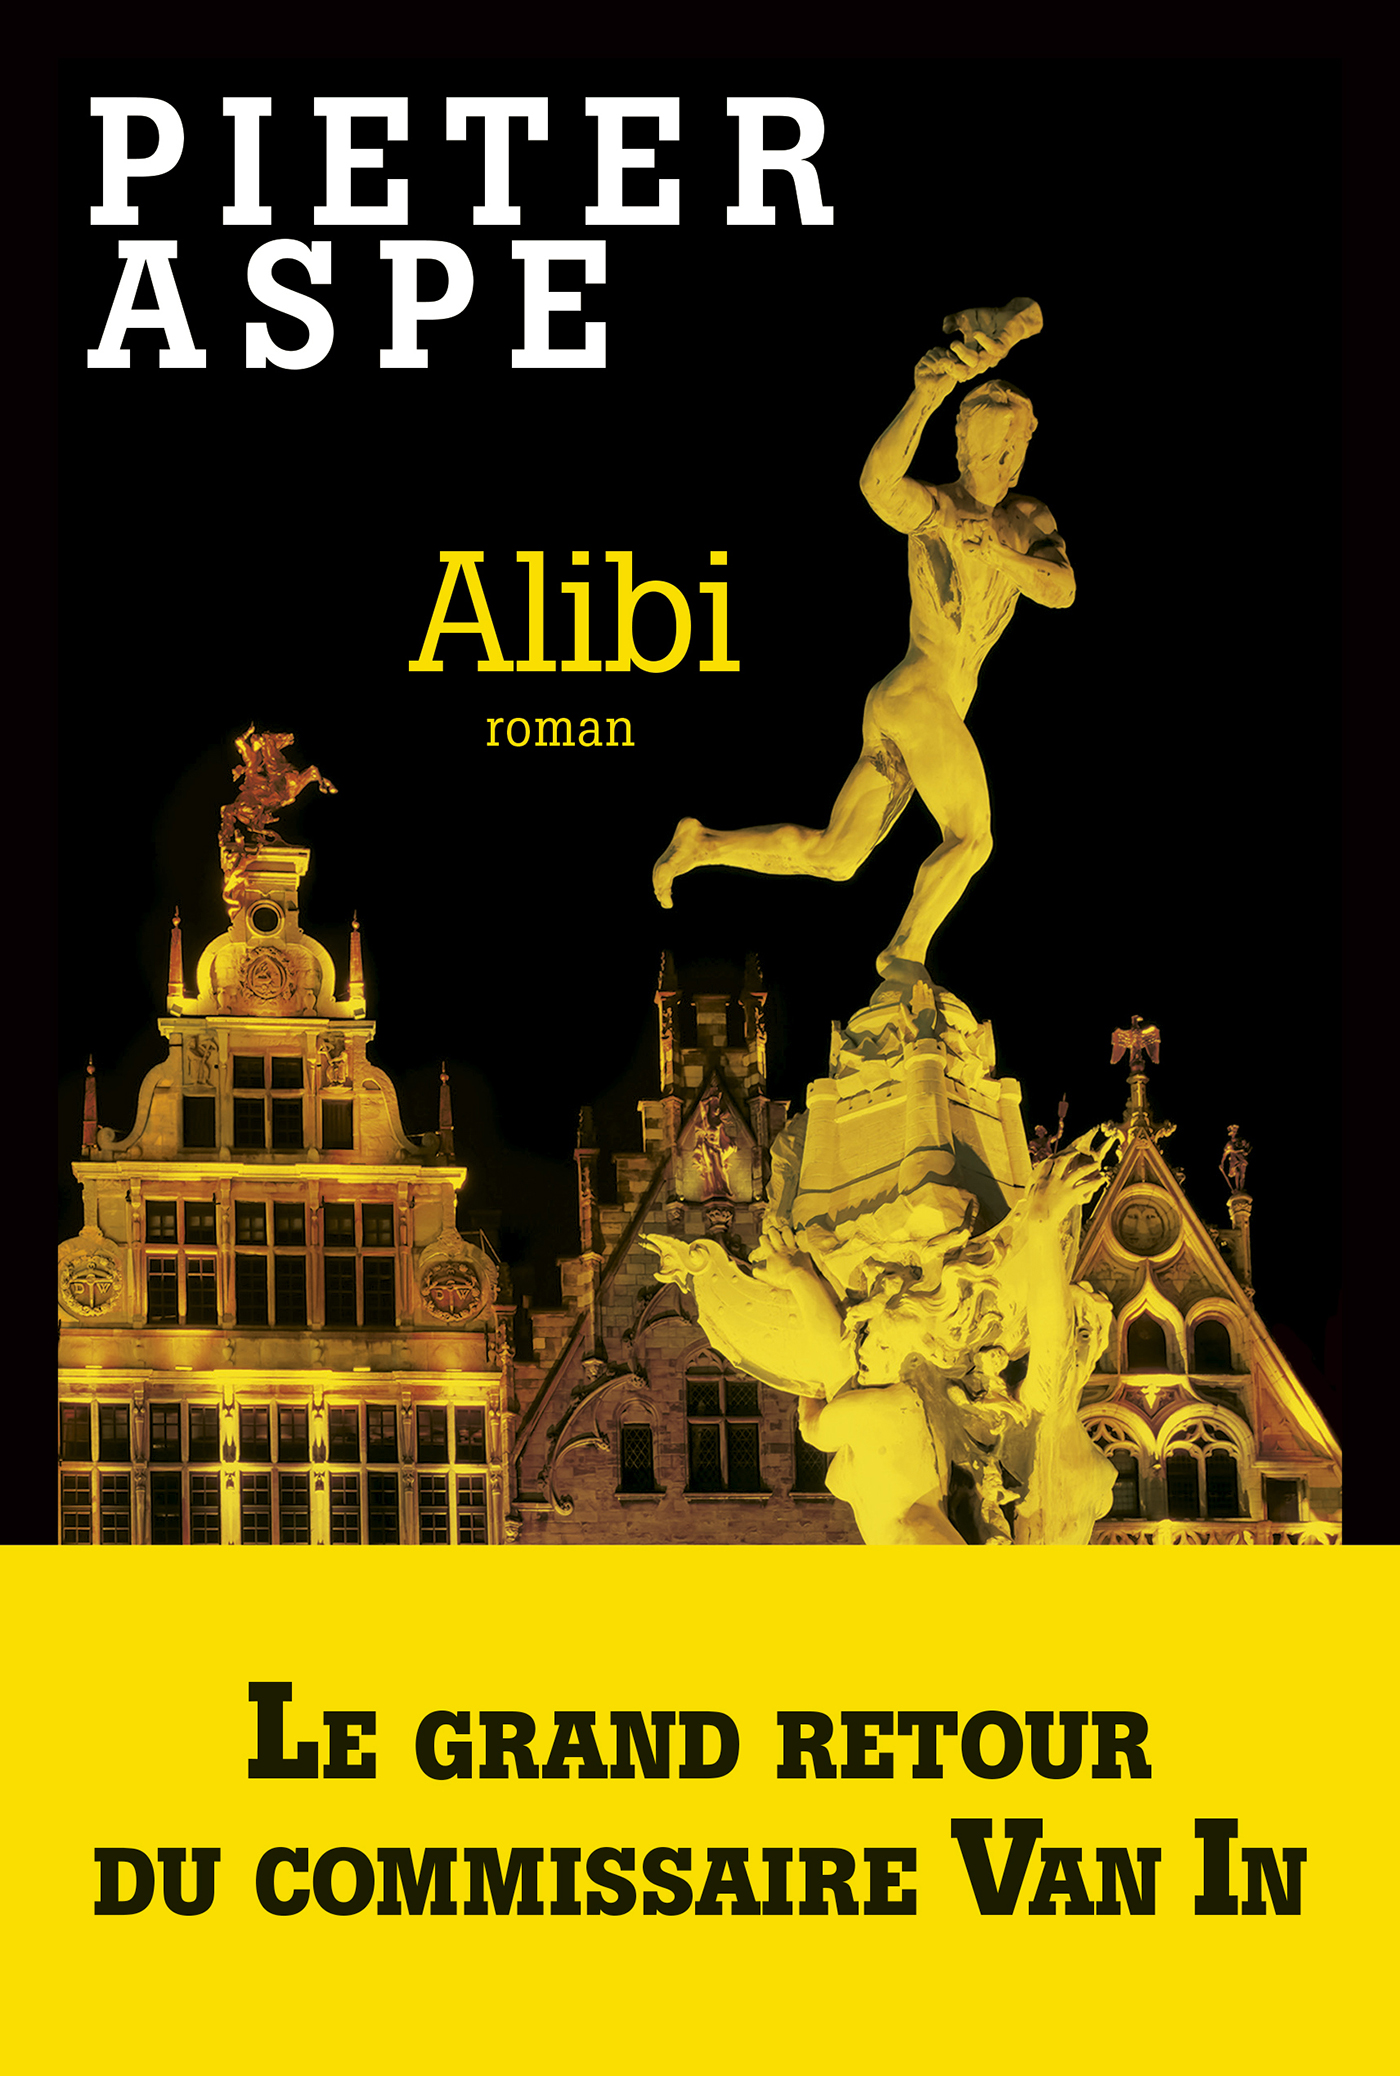 Afficher "Alibi"